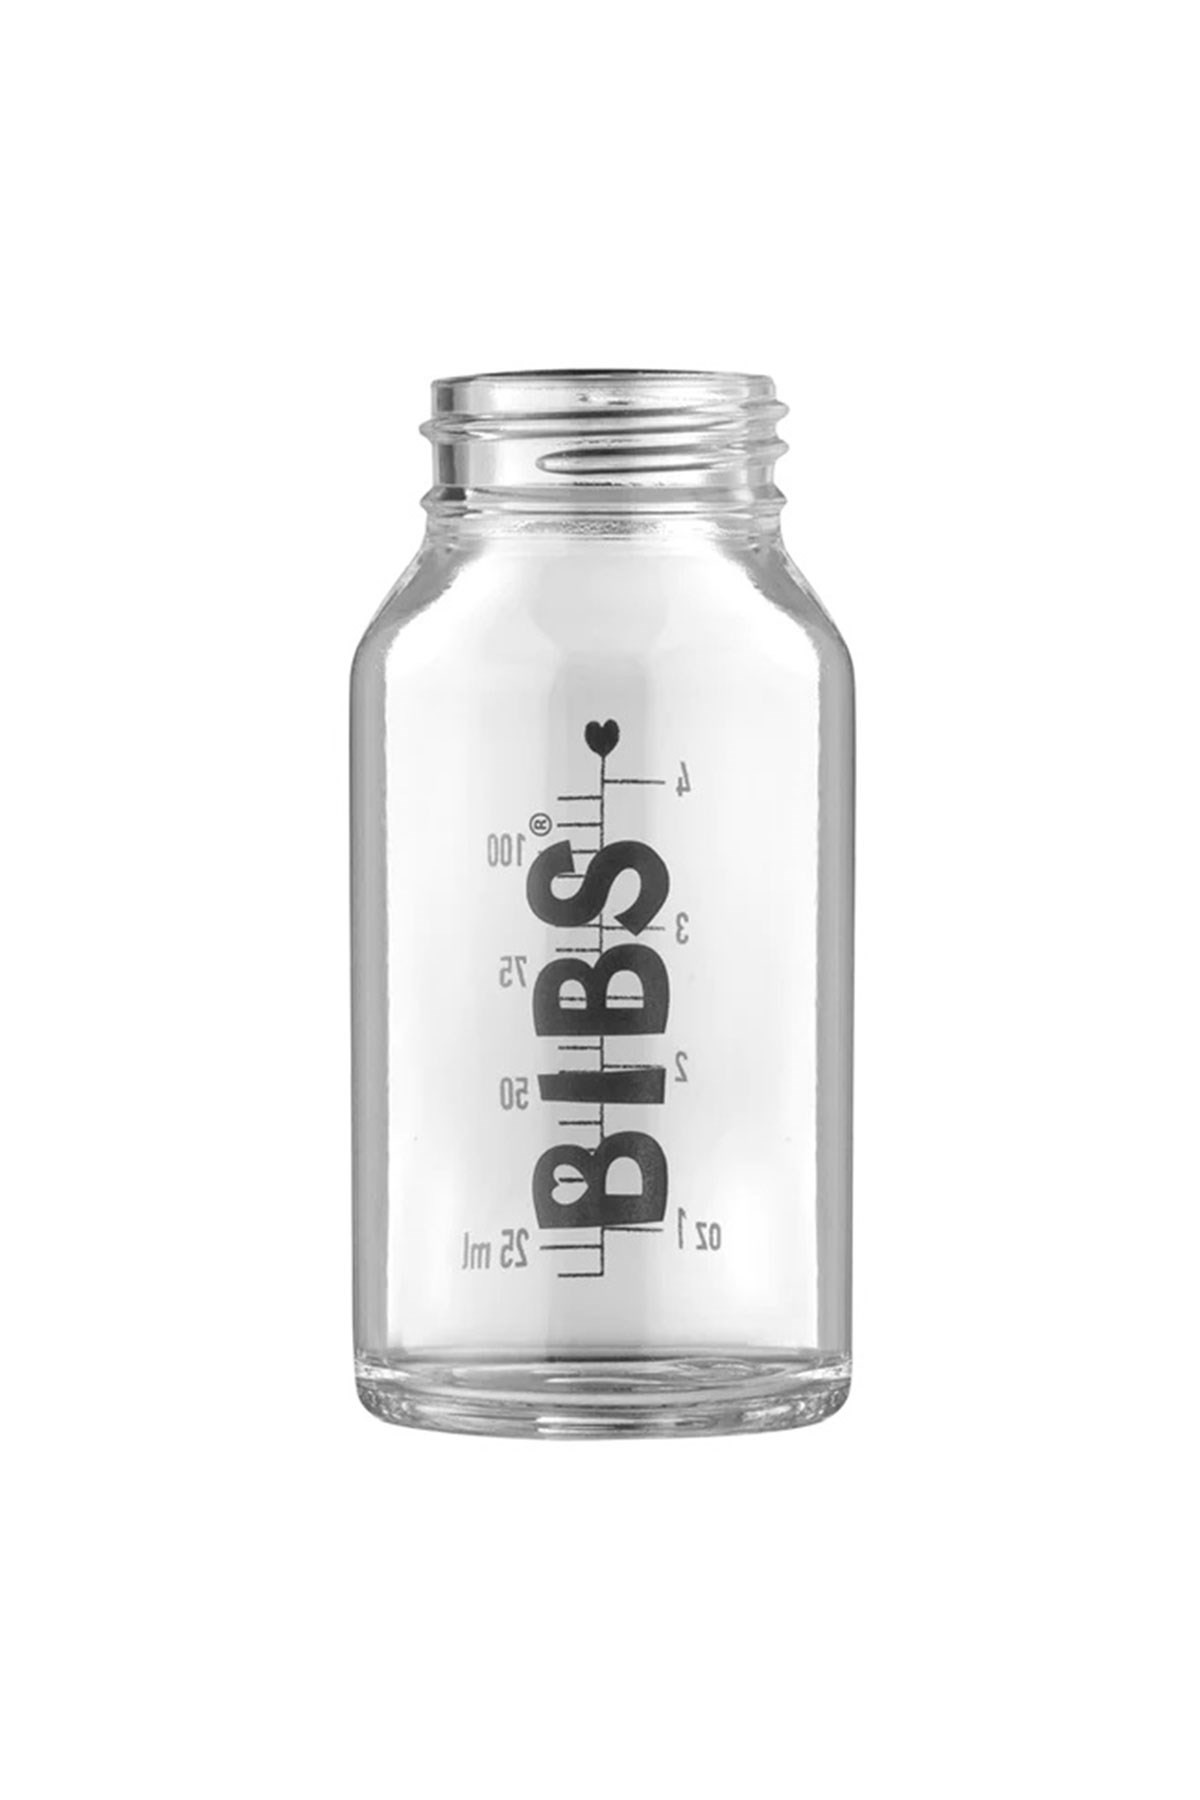 Bibs Baby Bottle Complete Set Biberon Ivory 100 ml